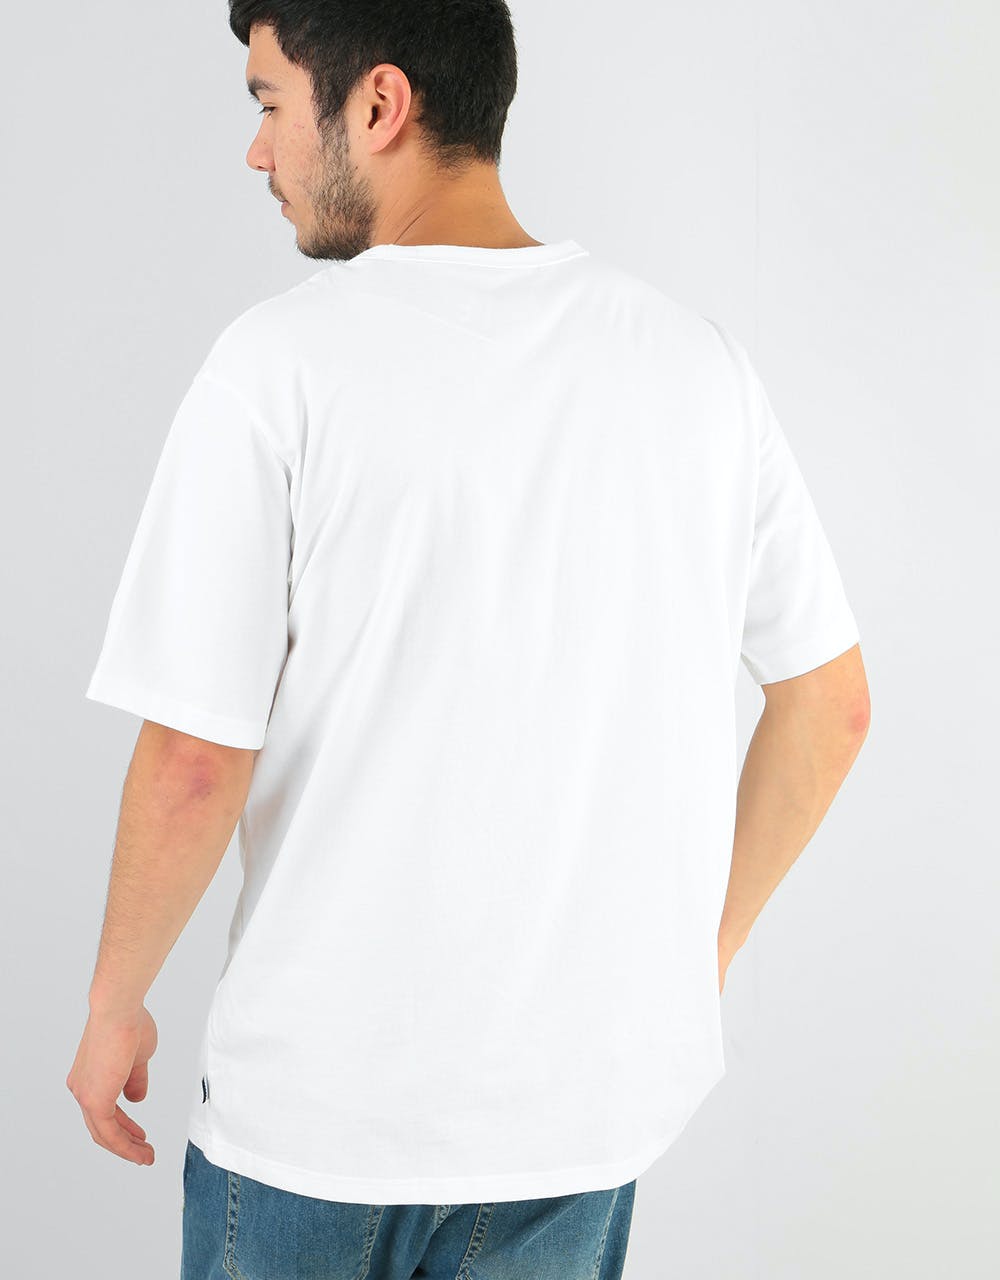 Adidas Mini Shmoo T-Shirt - White/Active Gold